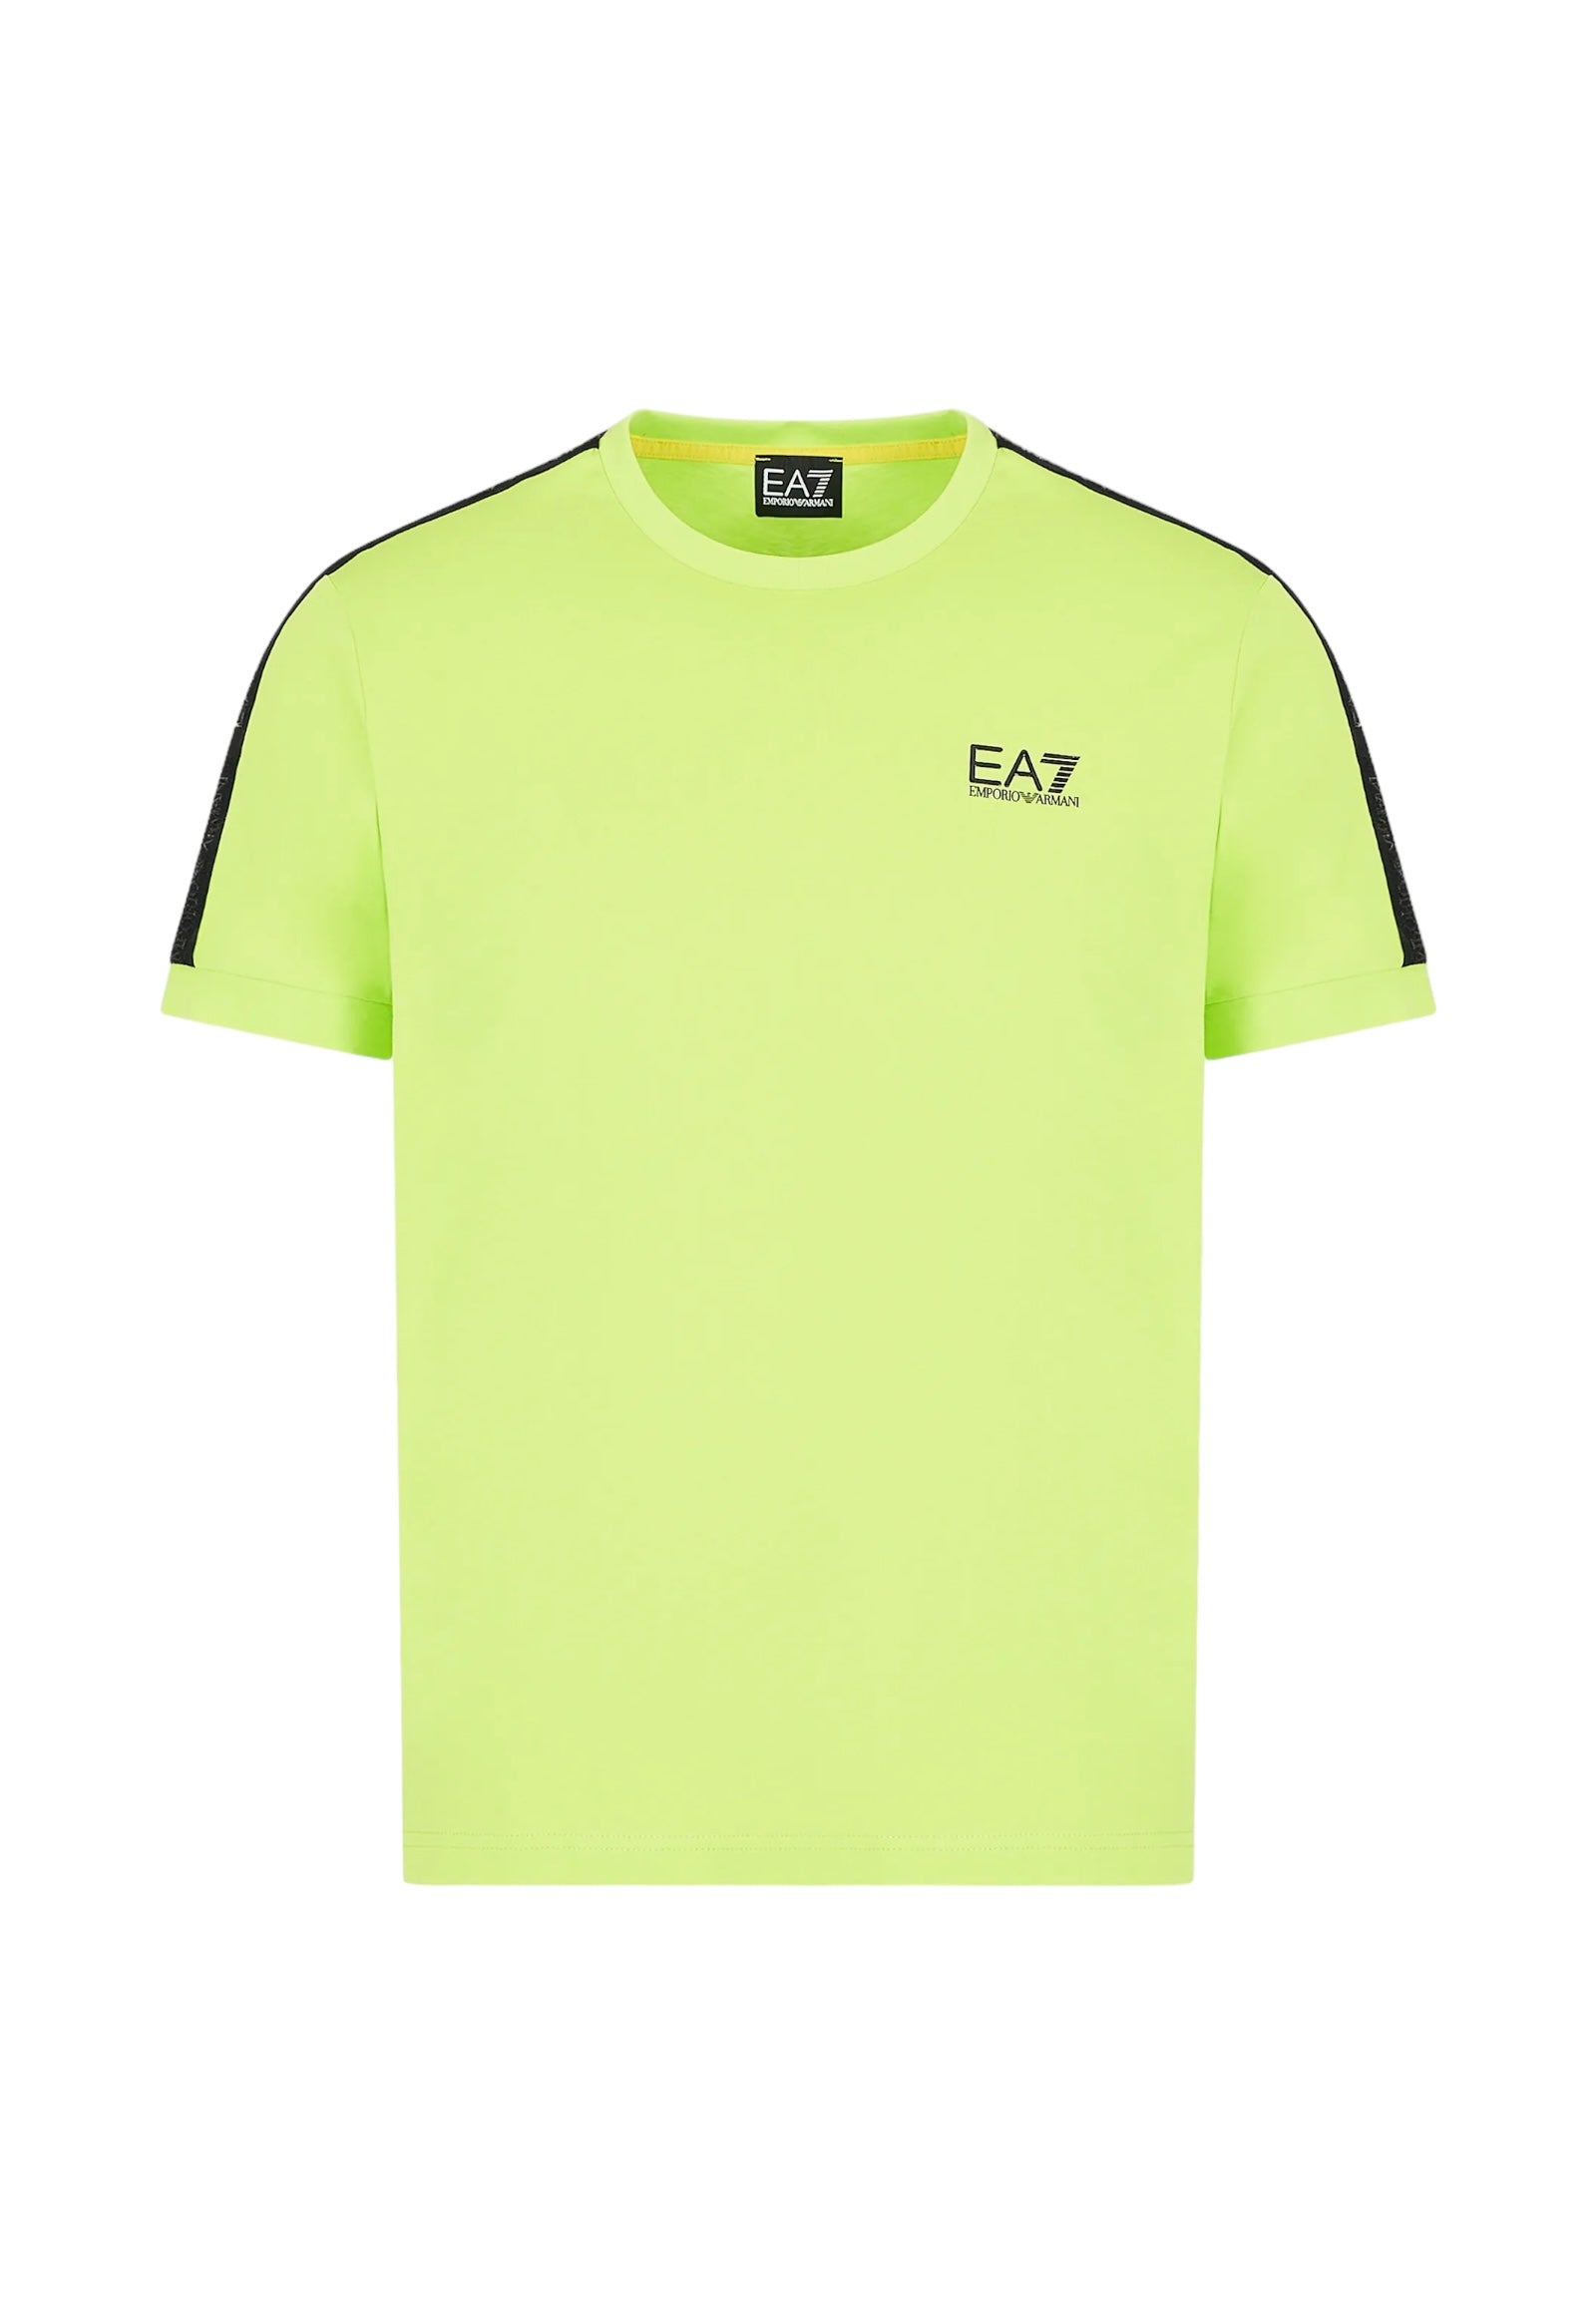 Ea7 Emporio Armani T-Shirt* 3dpt35 Acid Lime